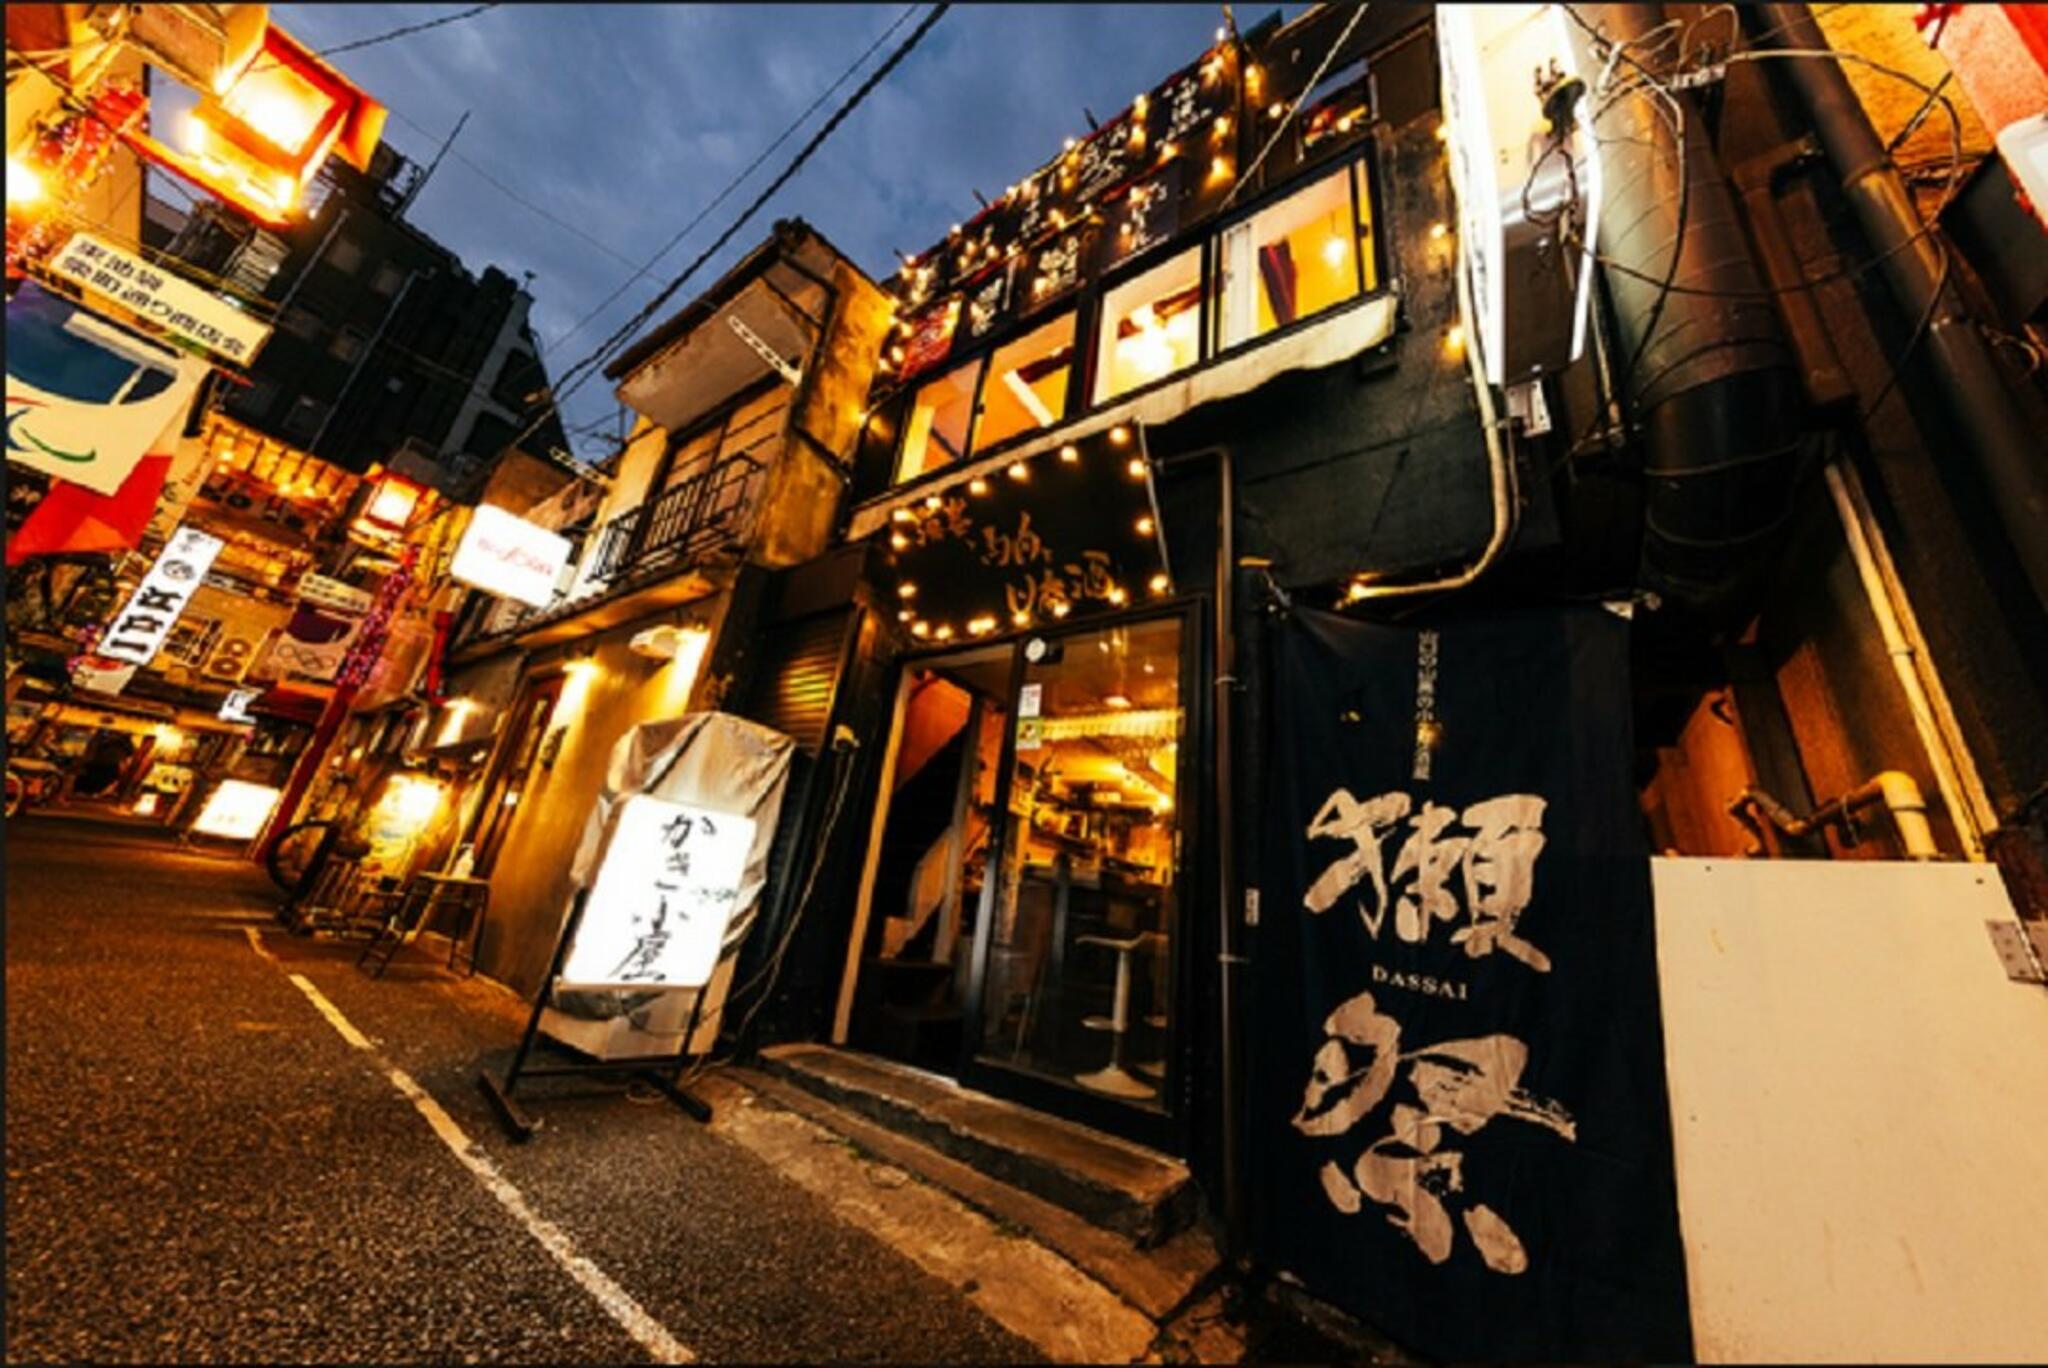 海老と馬肉と日本酒の居酒屋 池袋栄町横町店の代表写真2